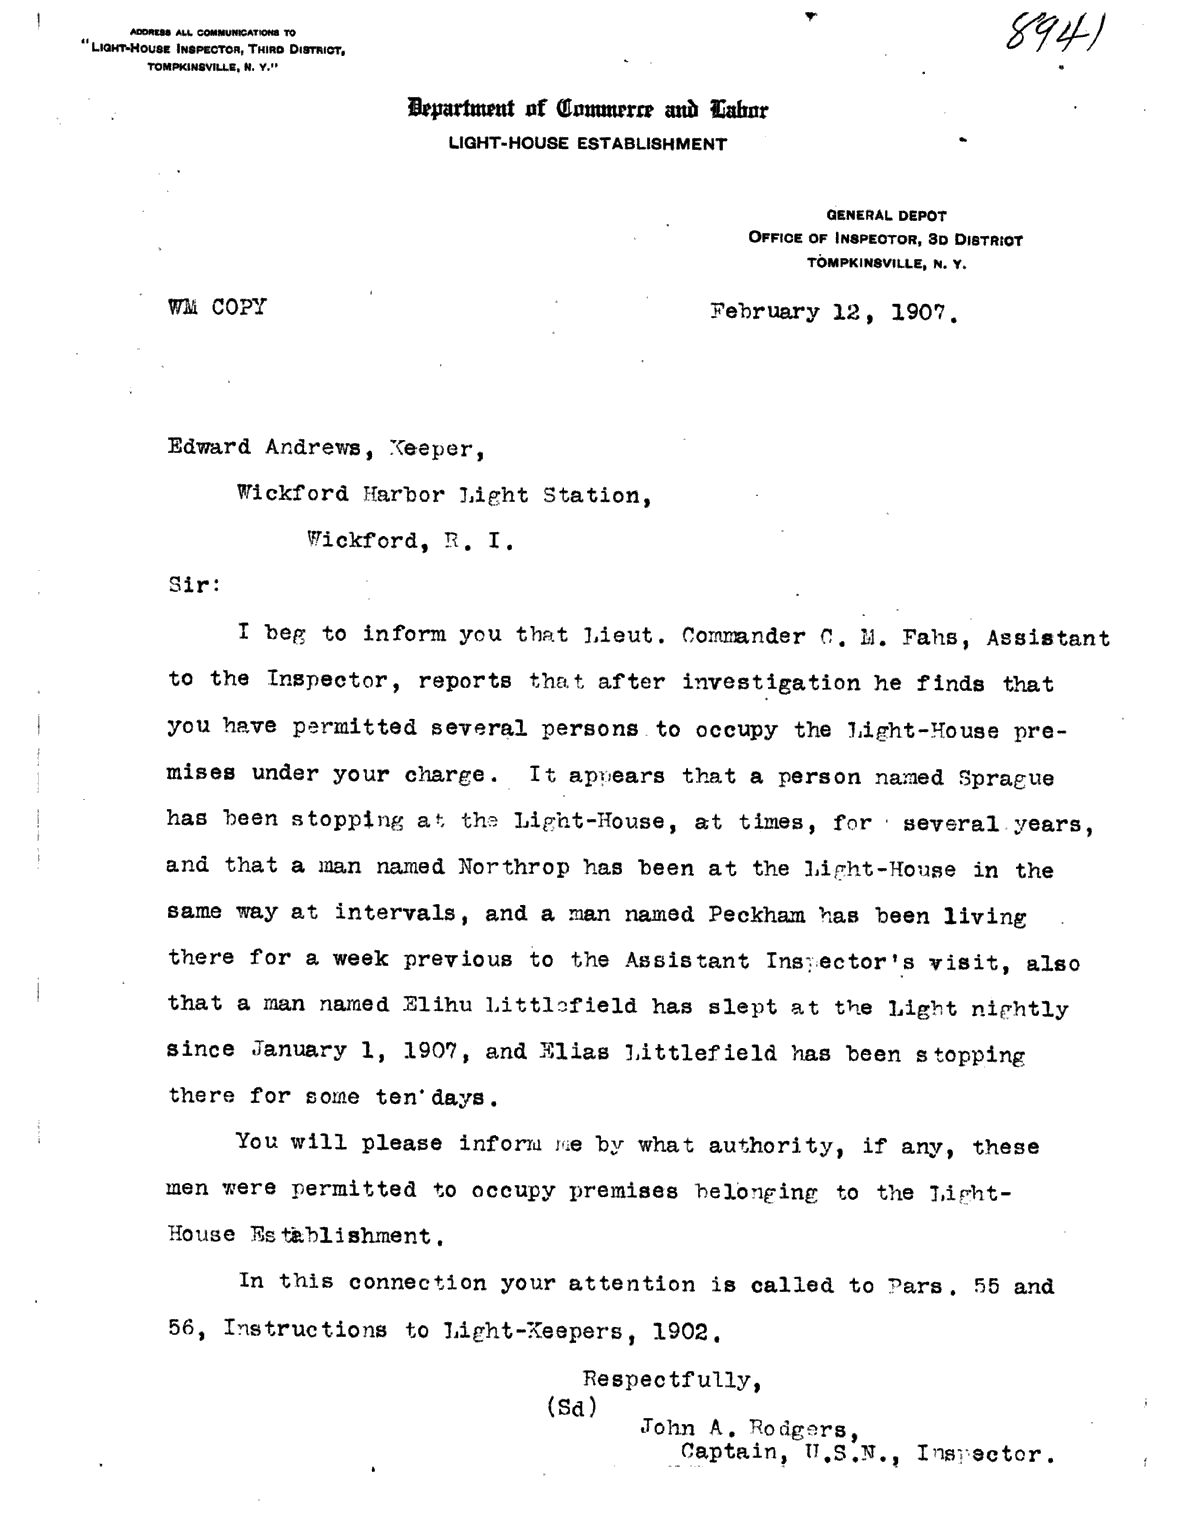 Wickford Harbor Light - Light-house Establishment Letter to Keeper- page 1